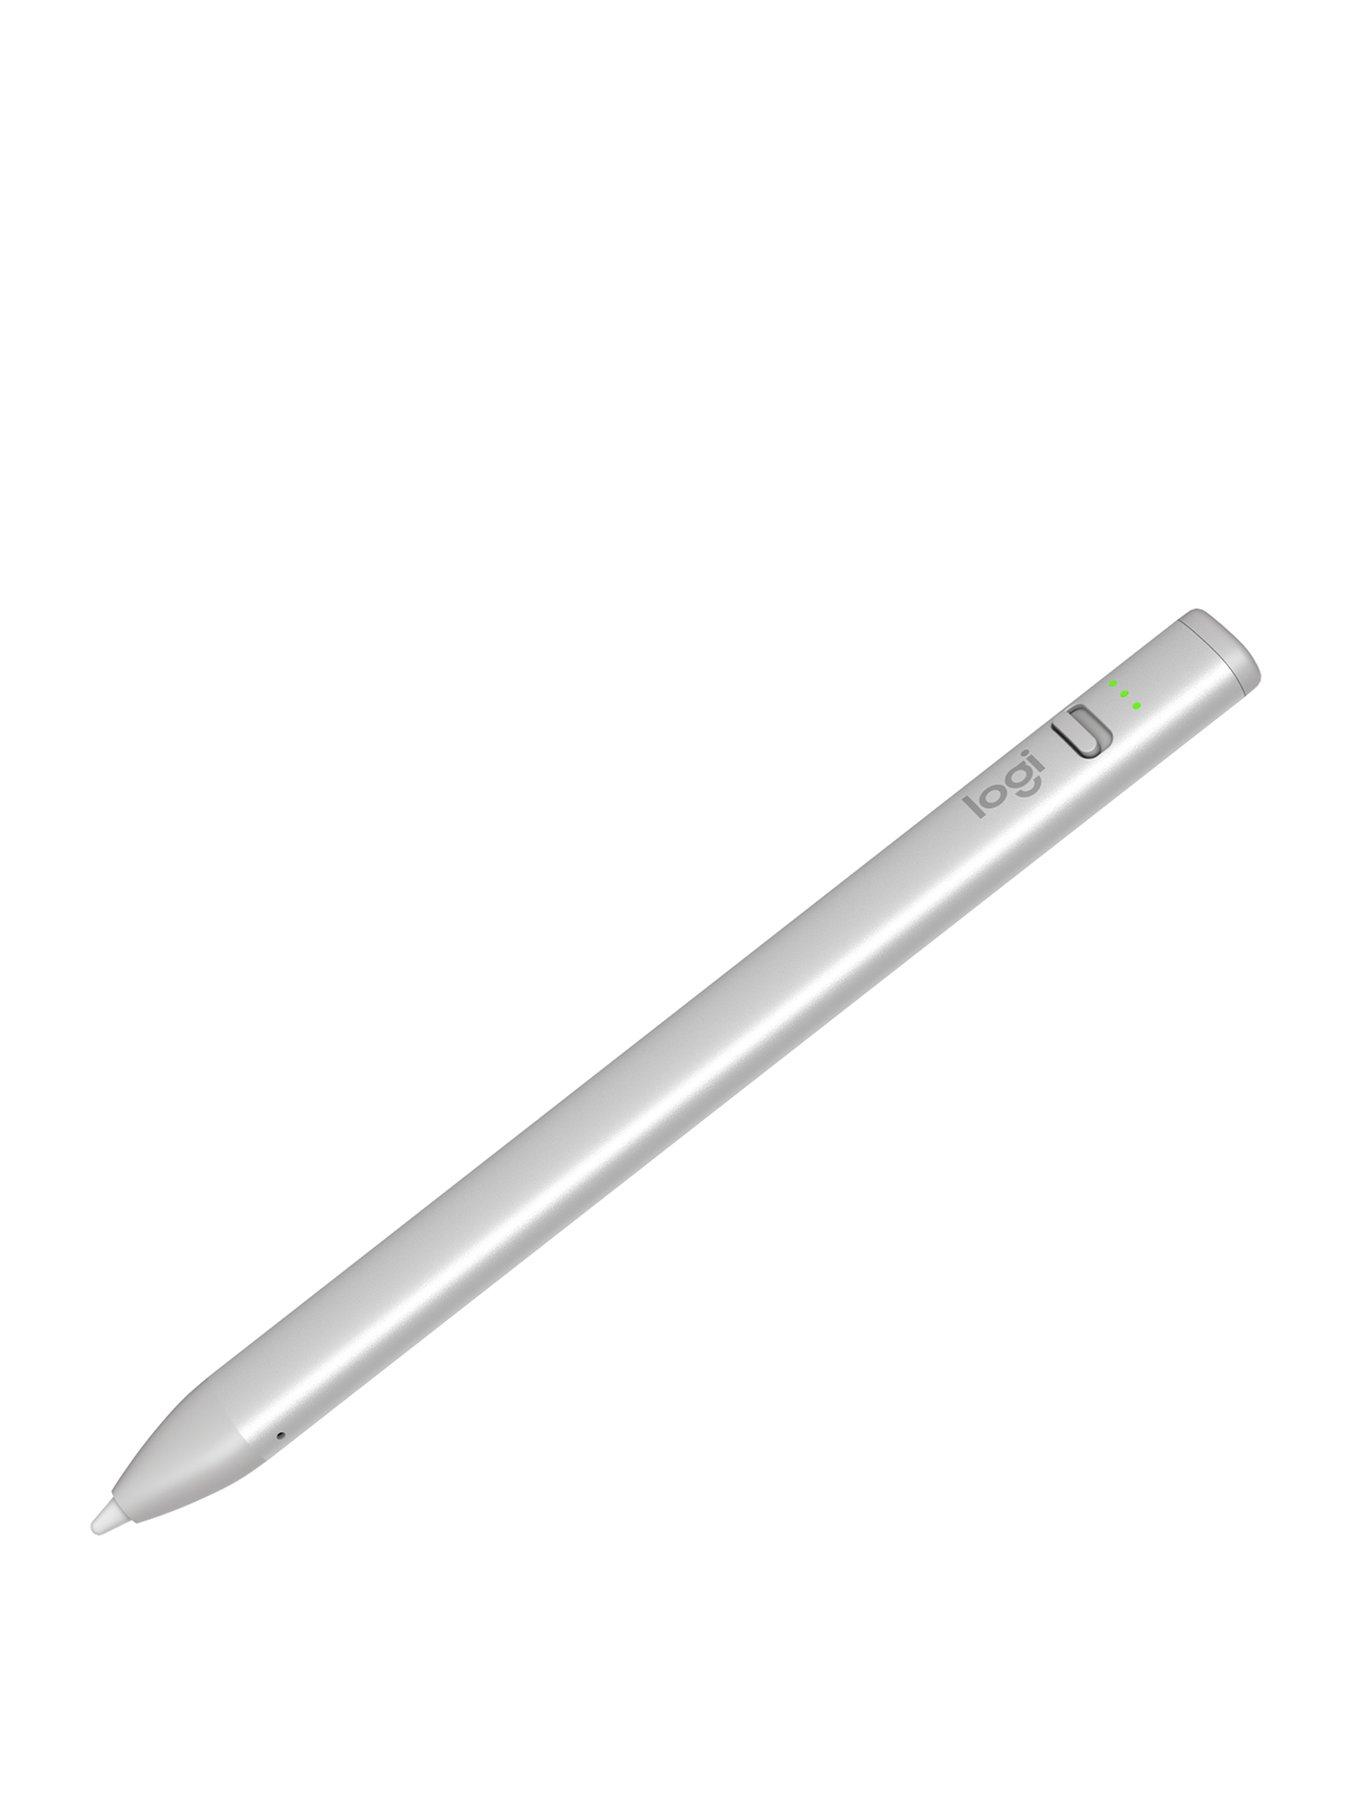 Logitech Crayon digital pencil for iPad | Very Ireland